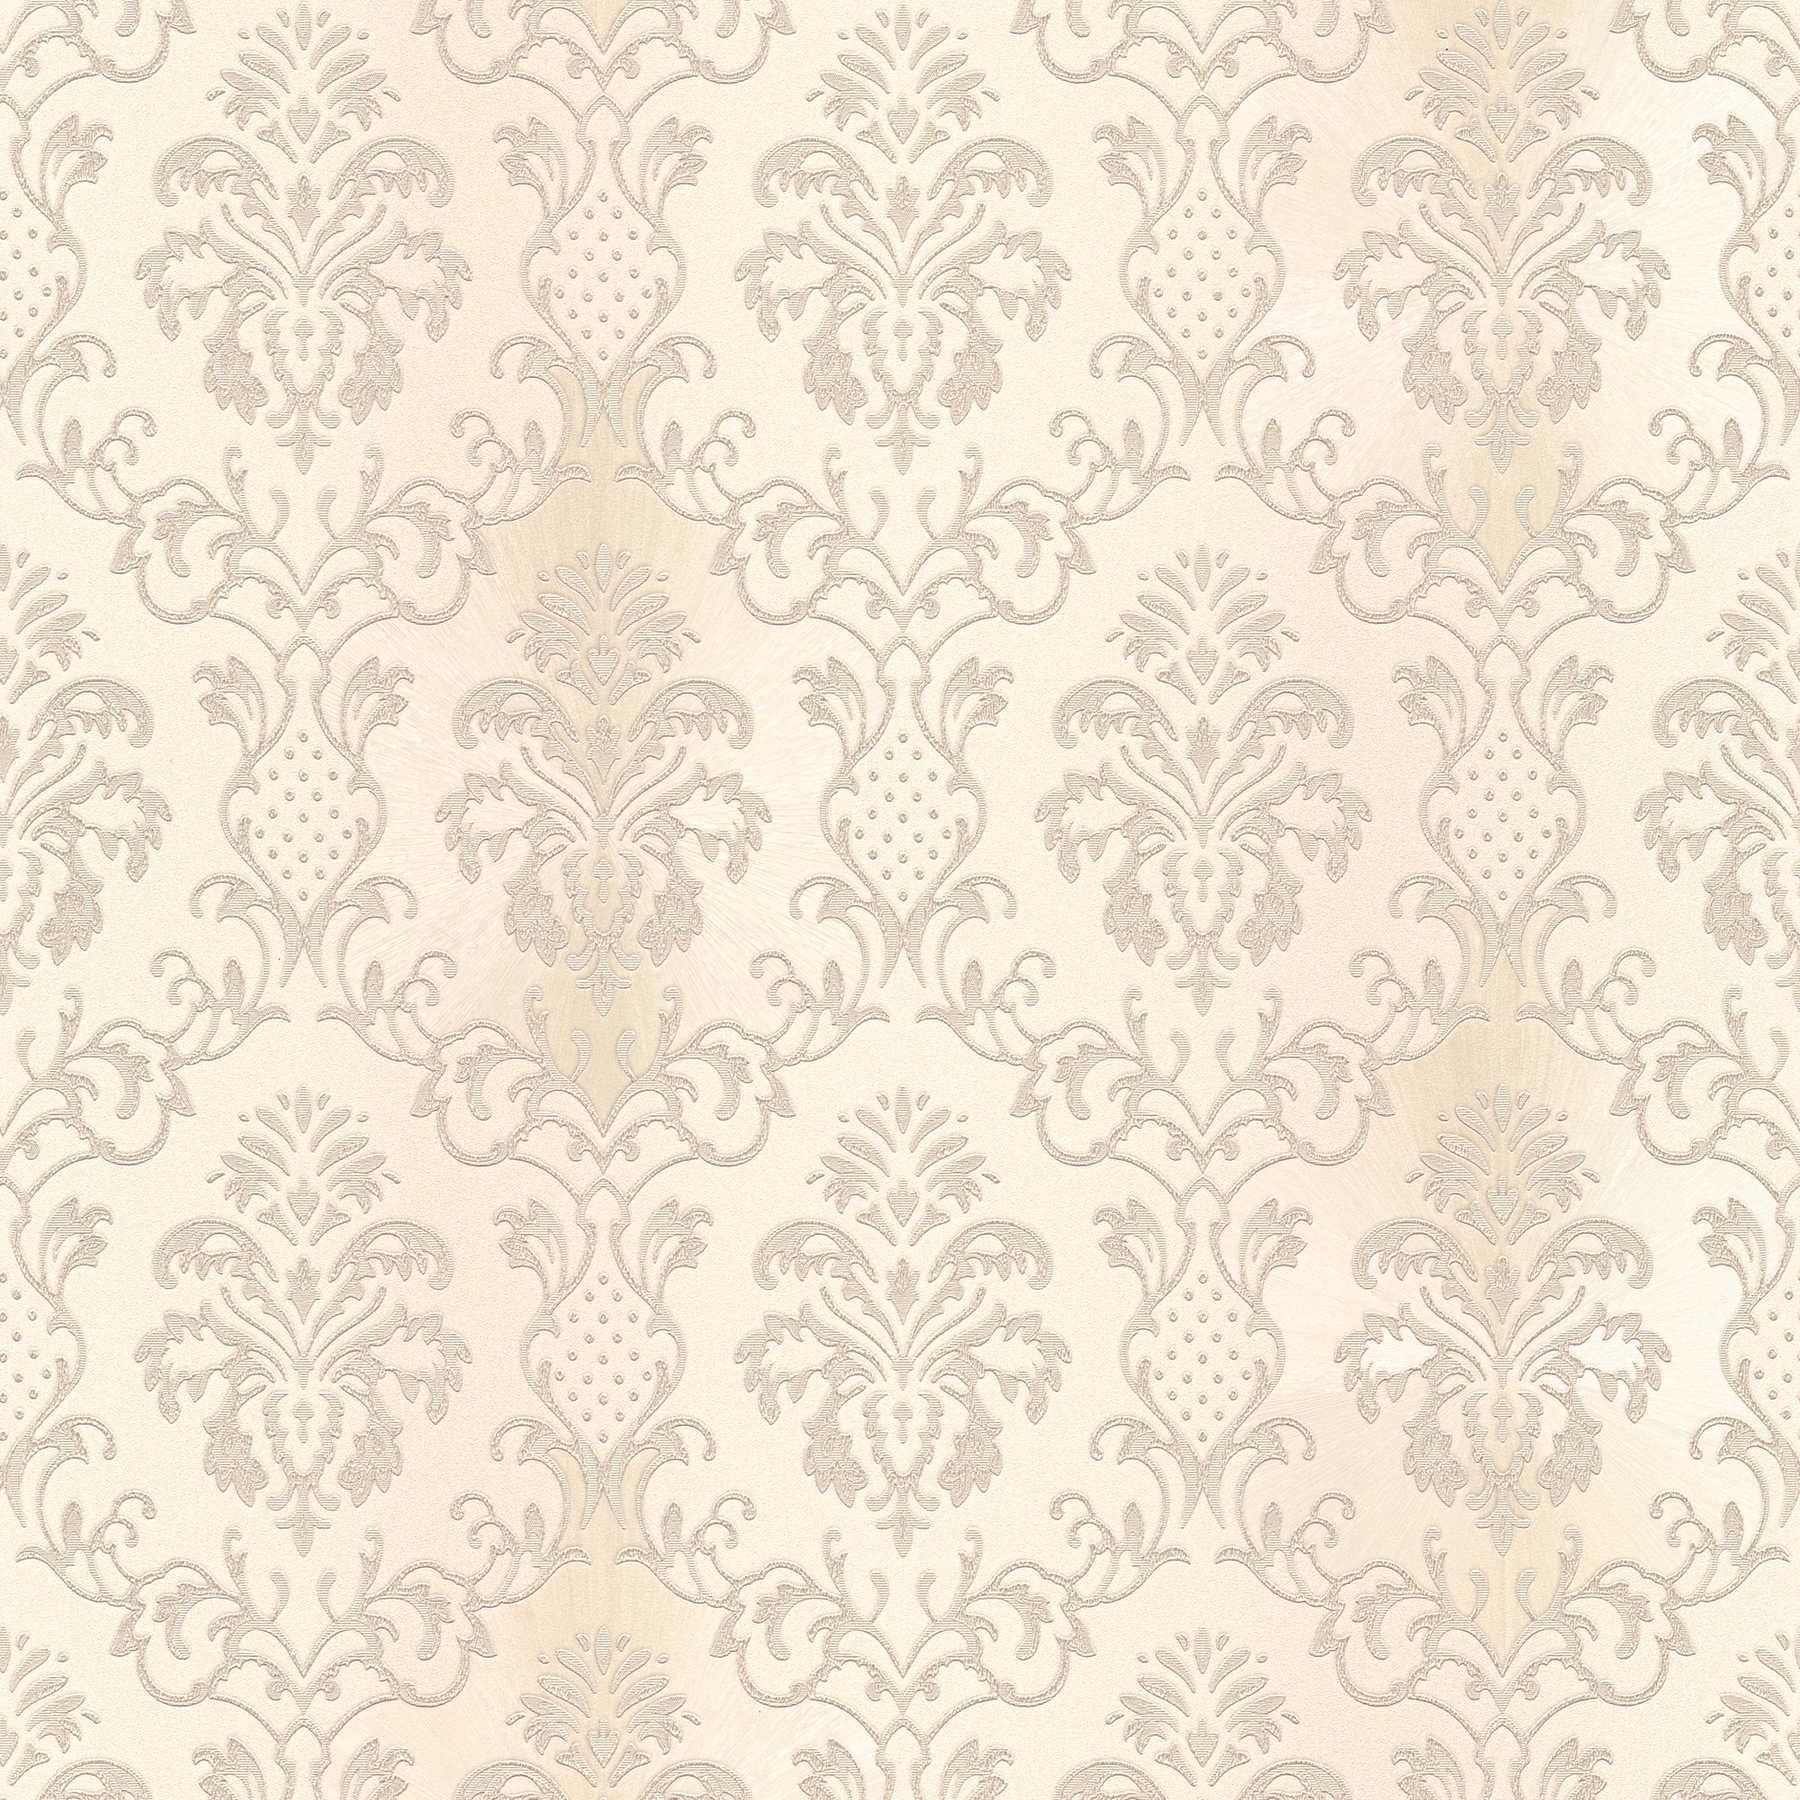 Ornament Tapete Colonial Style – Creme, Grau
